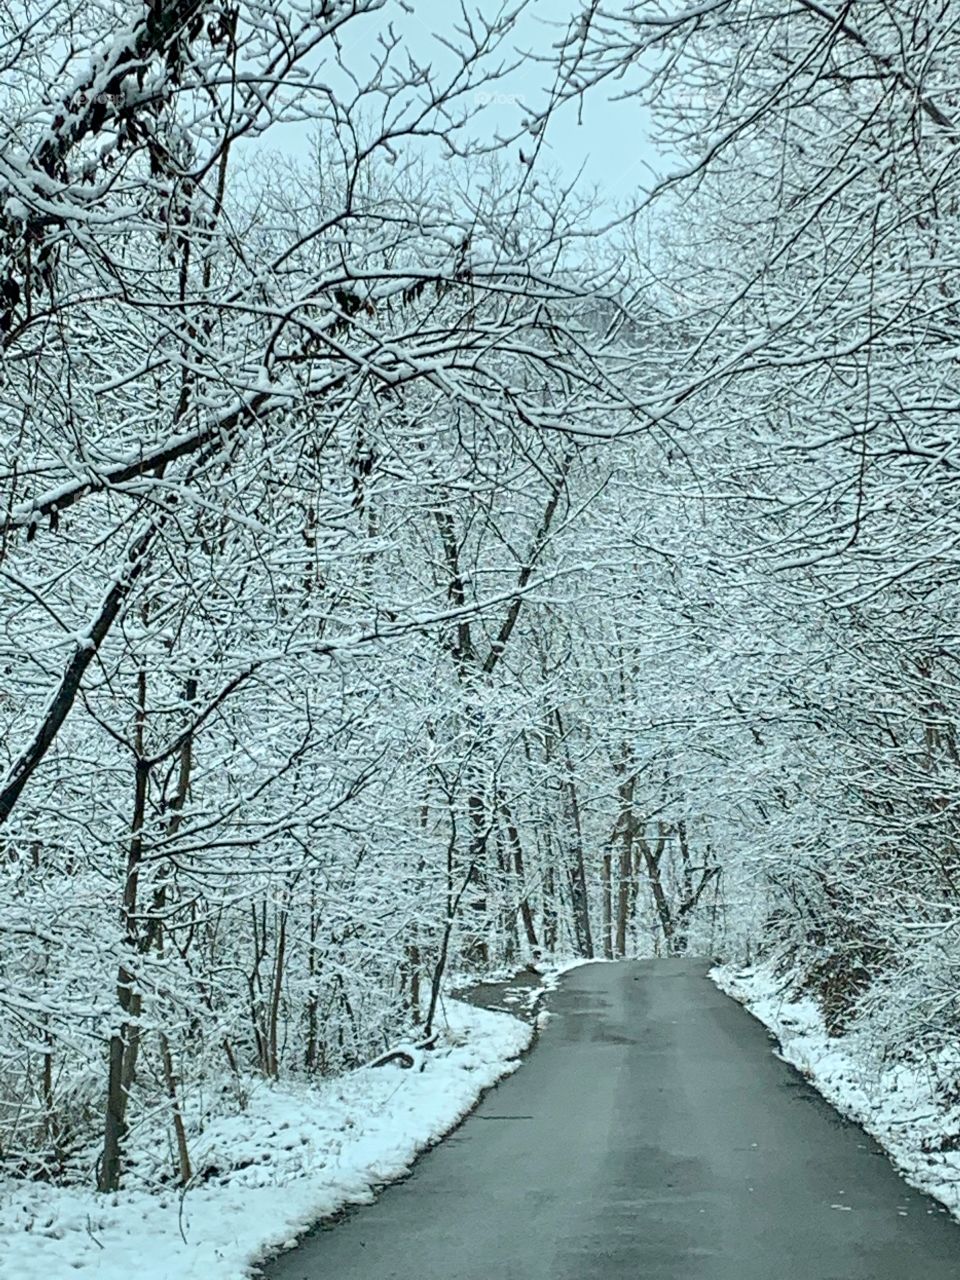 Snowy mountain drive